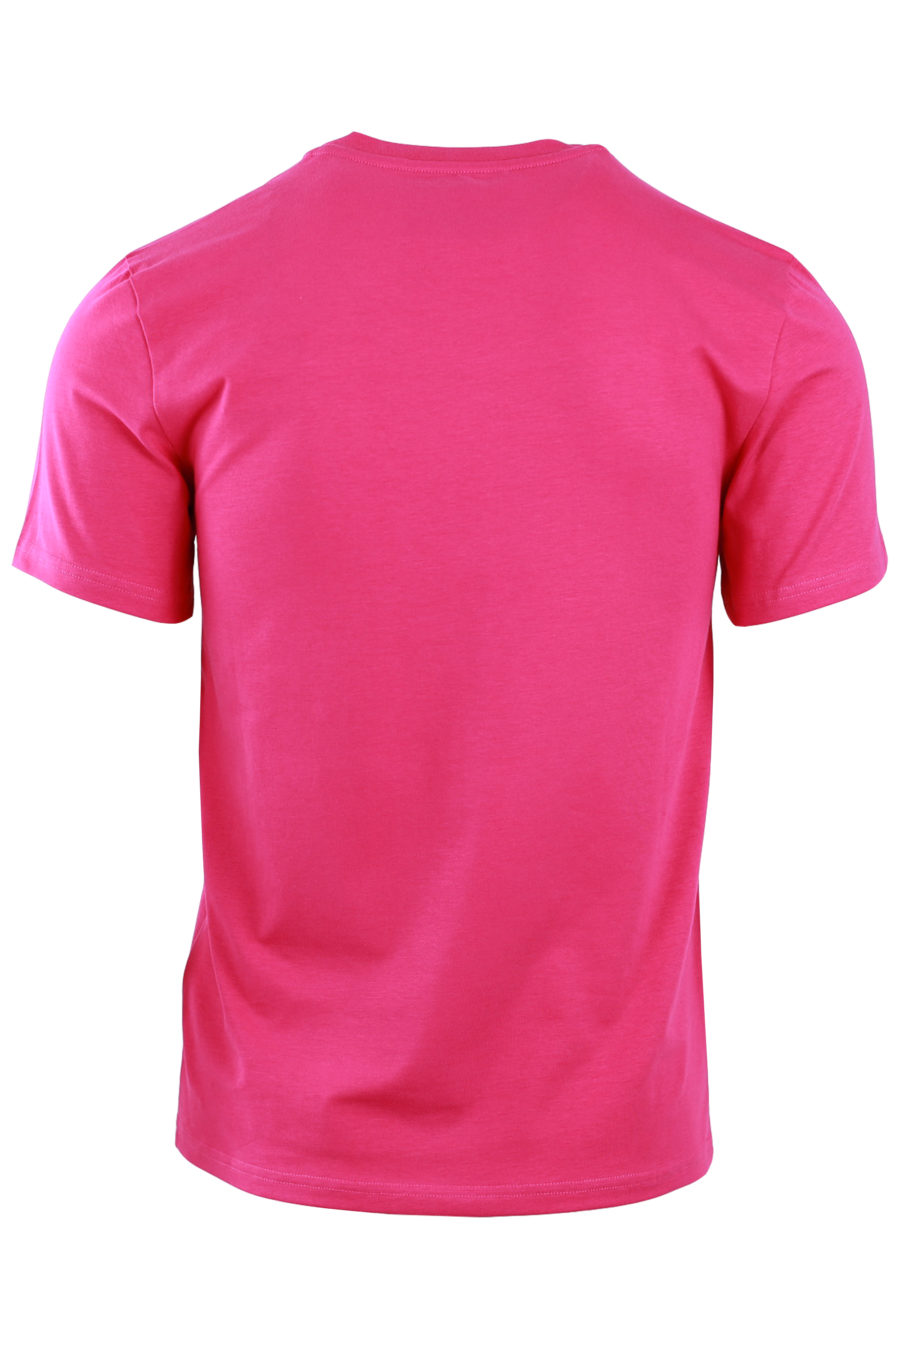 Pink T-shirt with black logo - 8a1302e96fadf5a0d743333adc9563fb0f1f1f1ca8e9